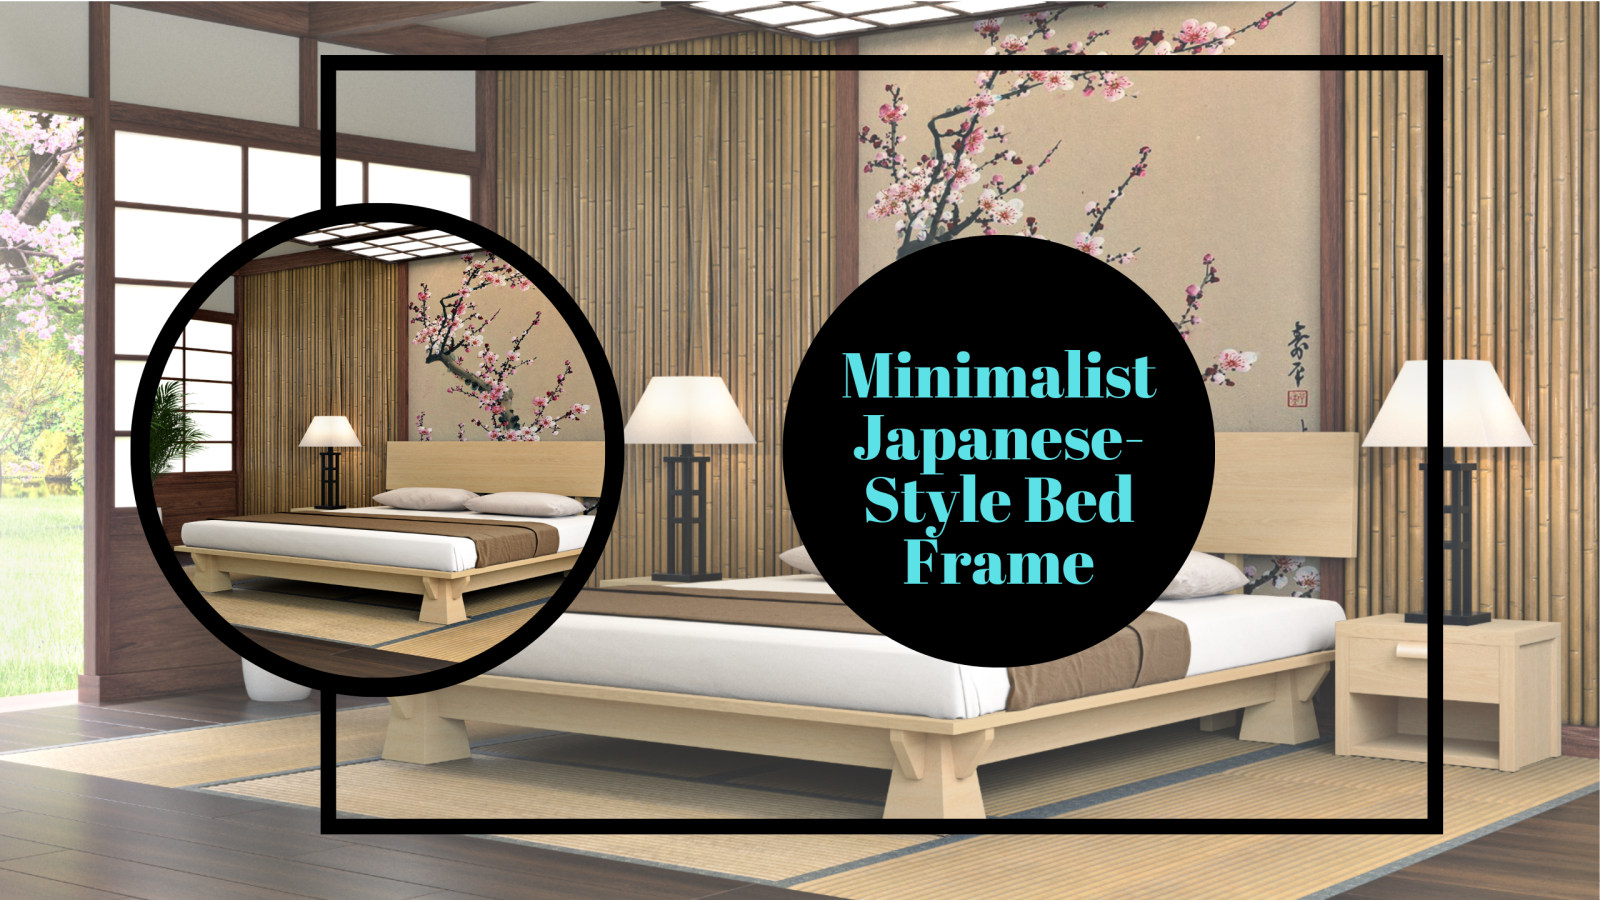 Minimalist Japanese-Style Bed Frame